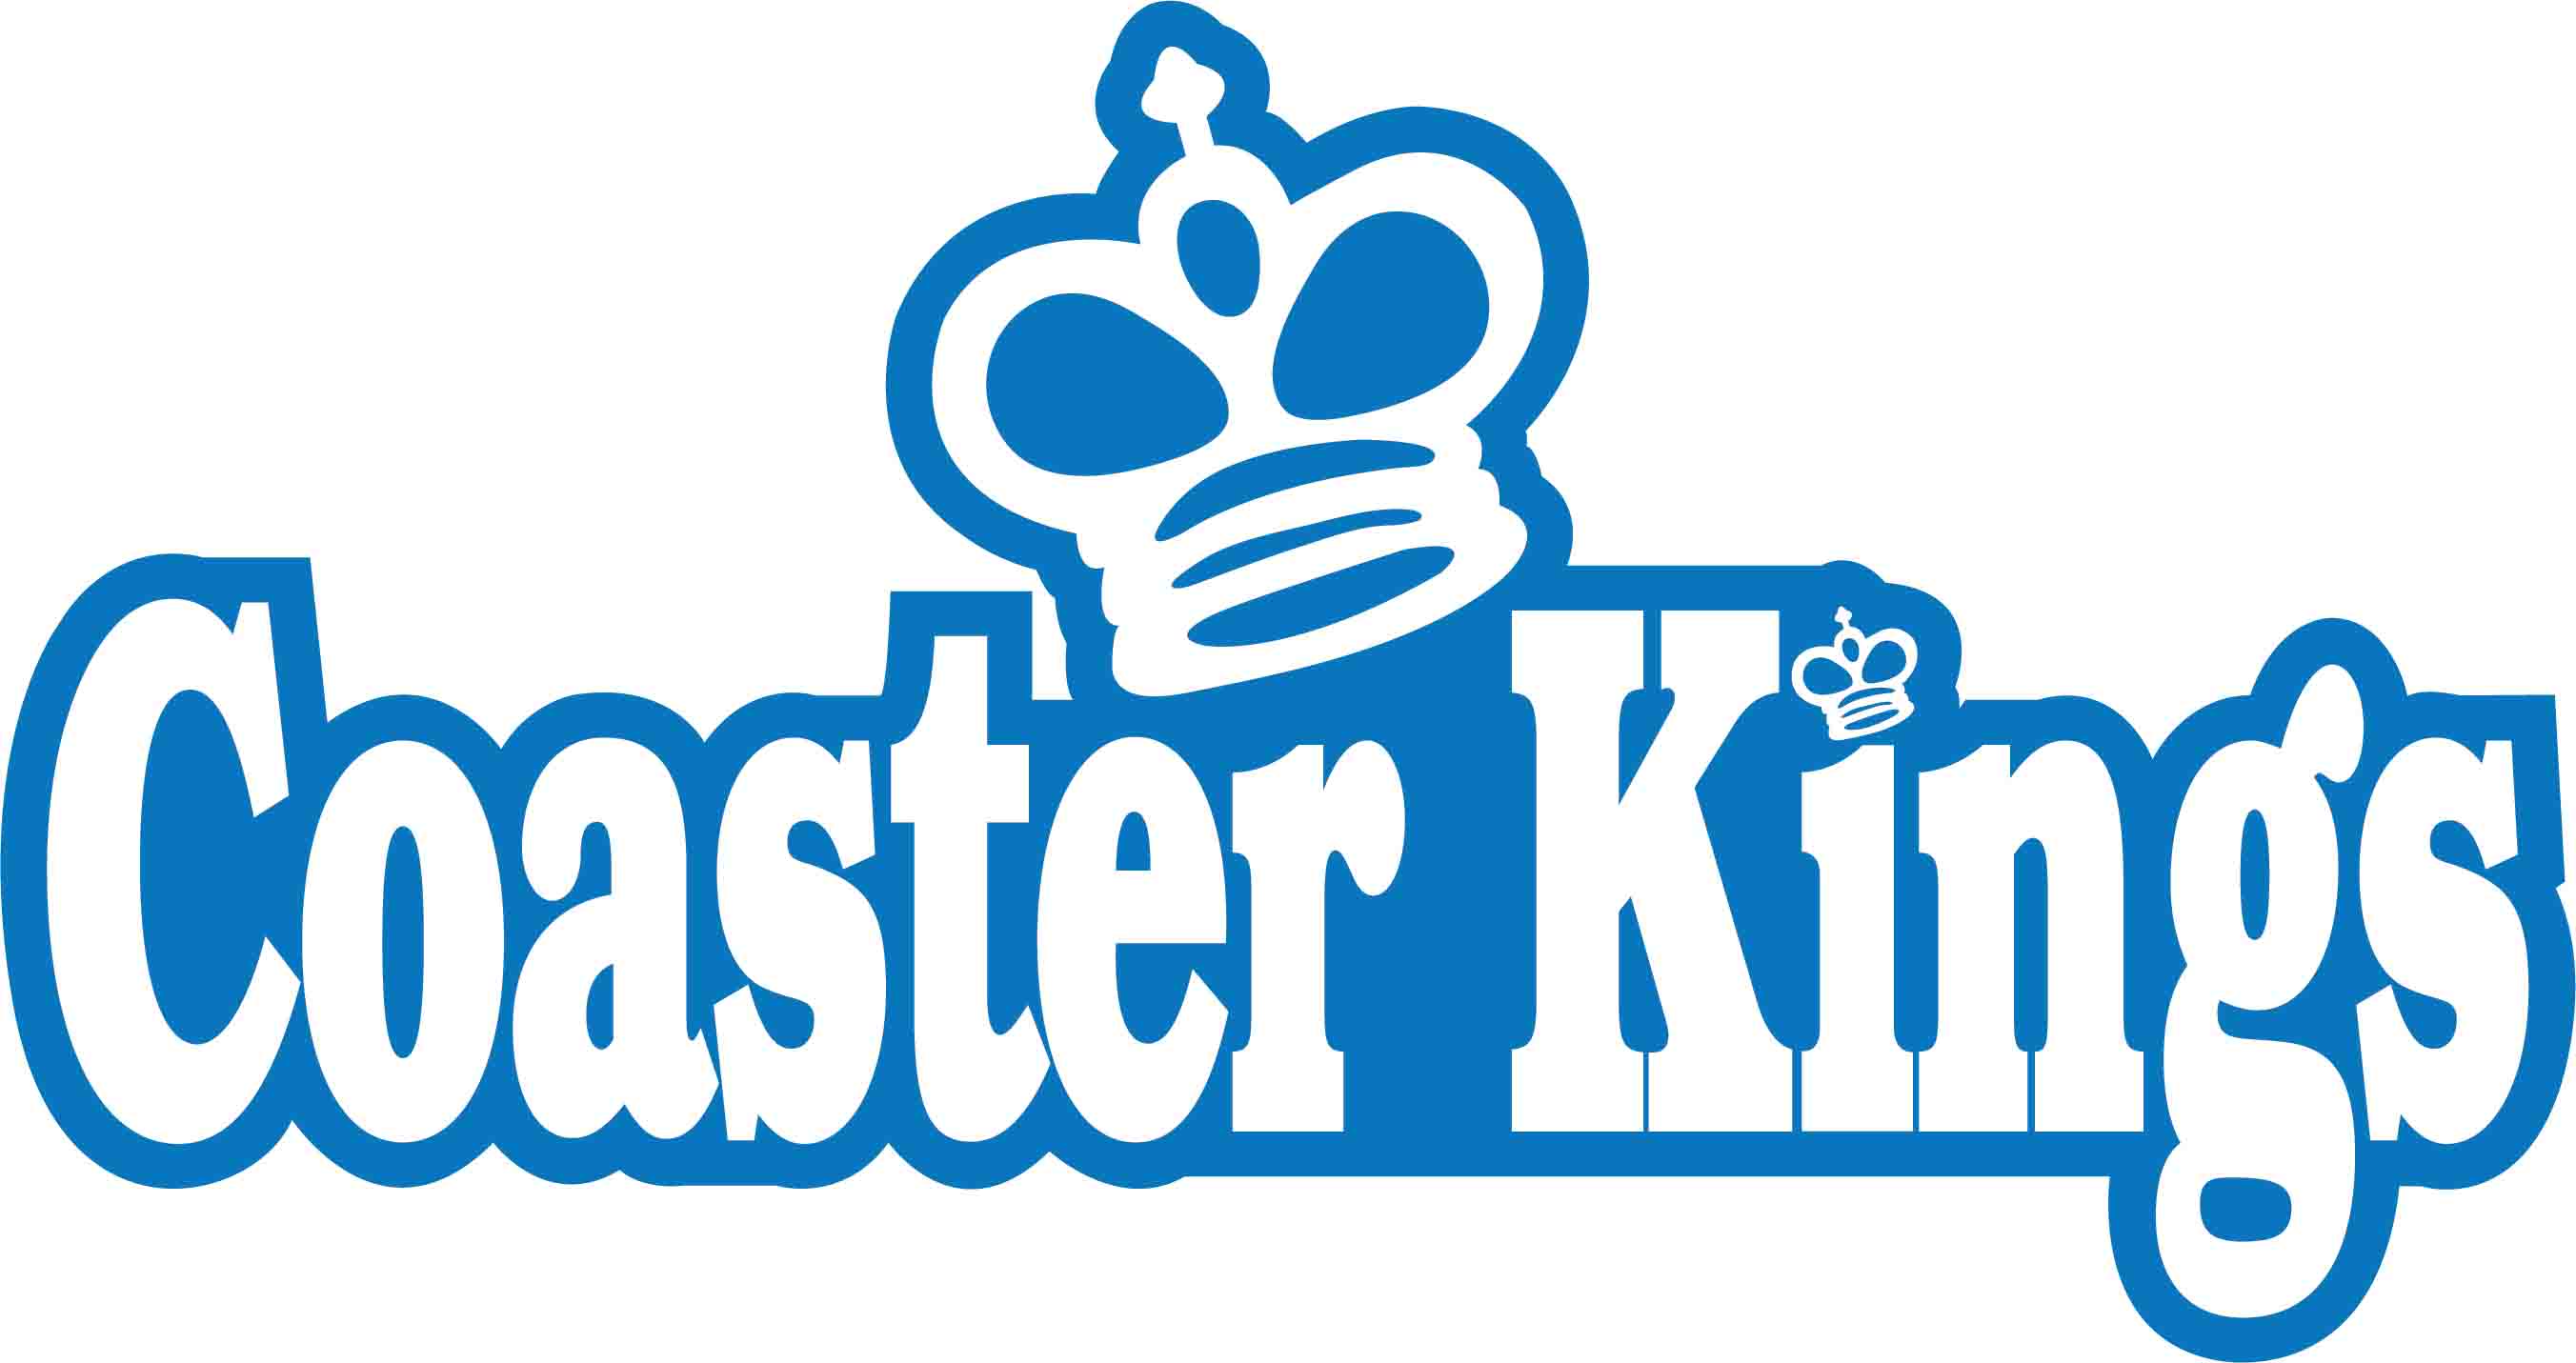 Coaster Logo - Coaster Kings. Custom Drink Coasters